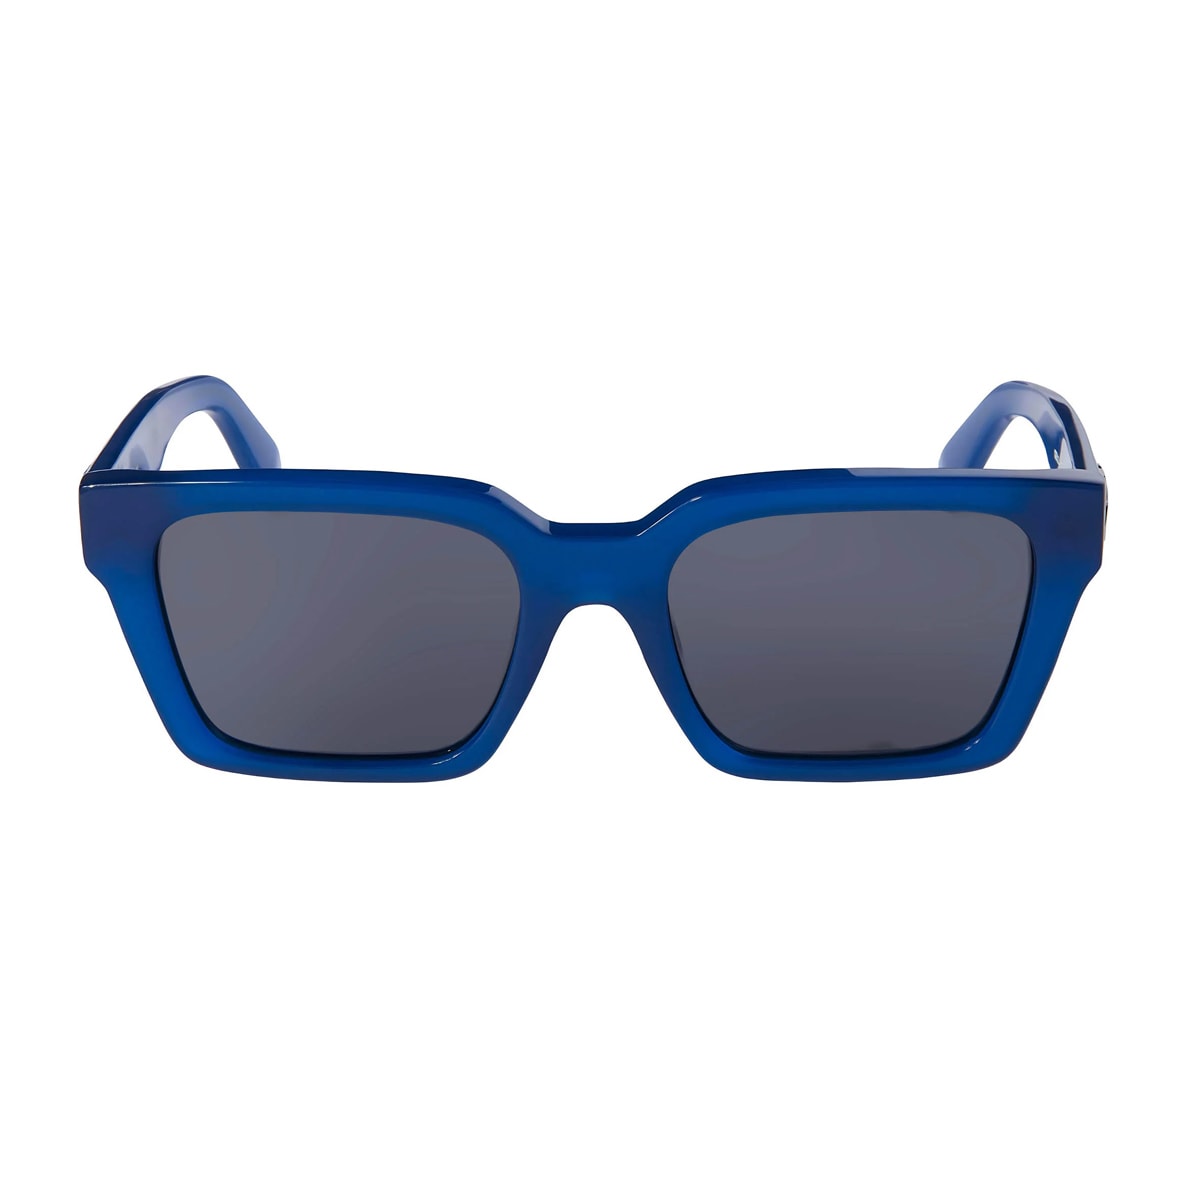 Oeri111 Branson 4507 Blue Sunglasses